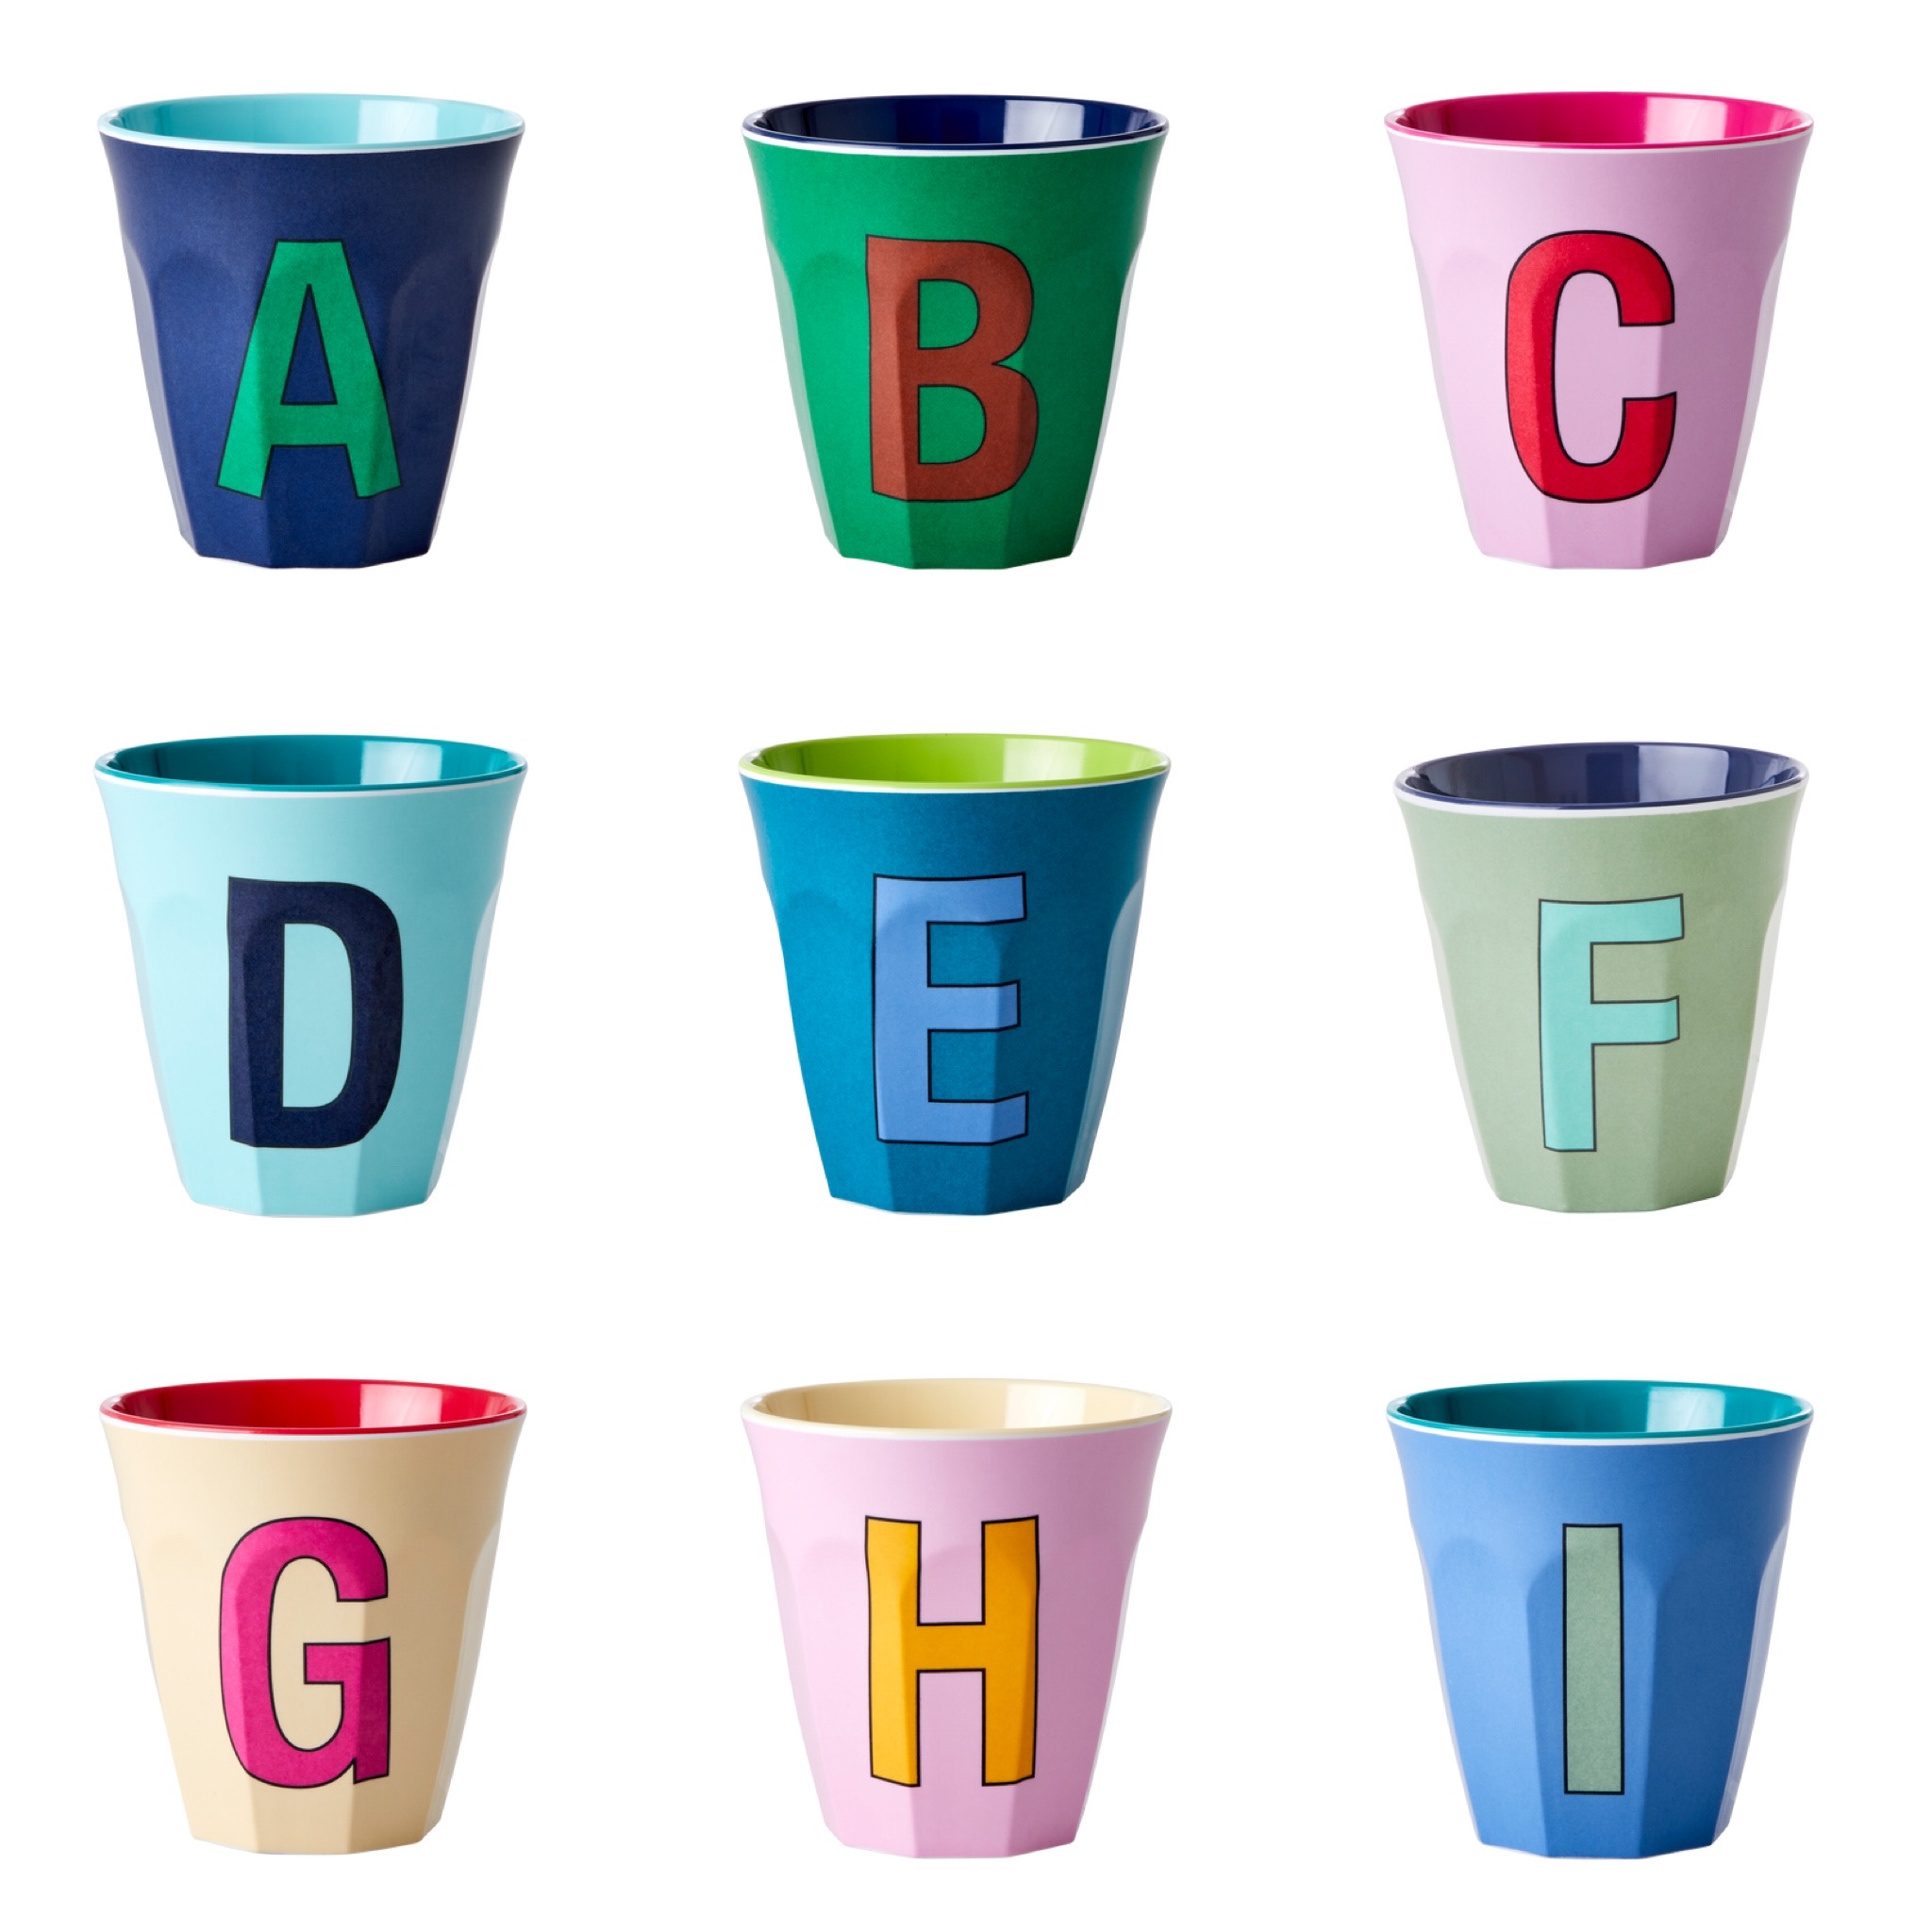 rice Alphabet Melamine Cups